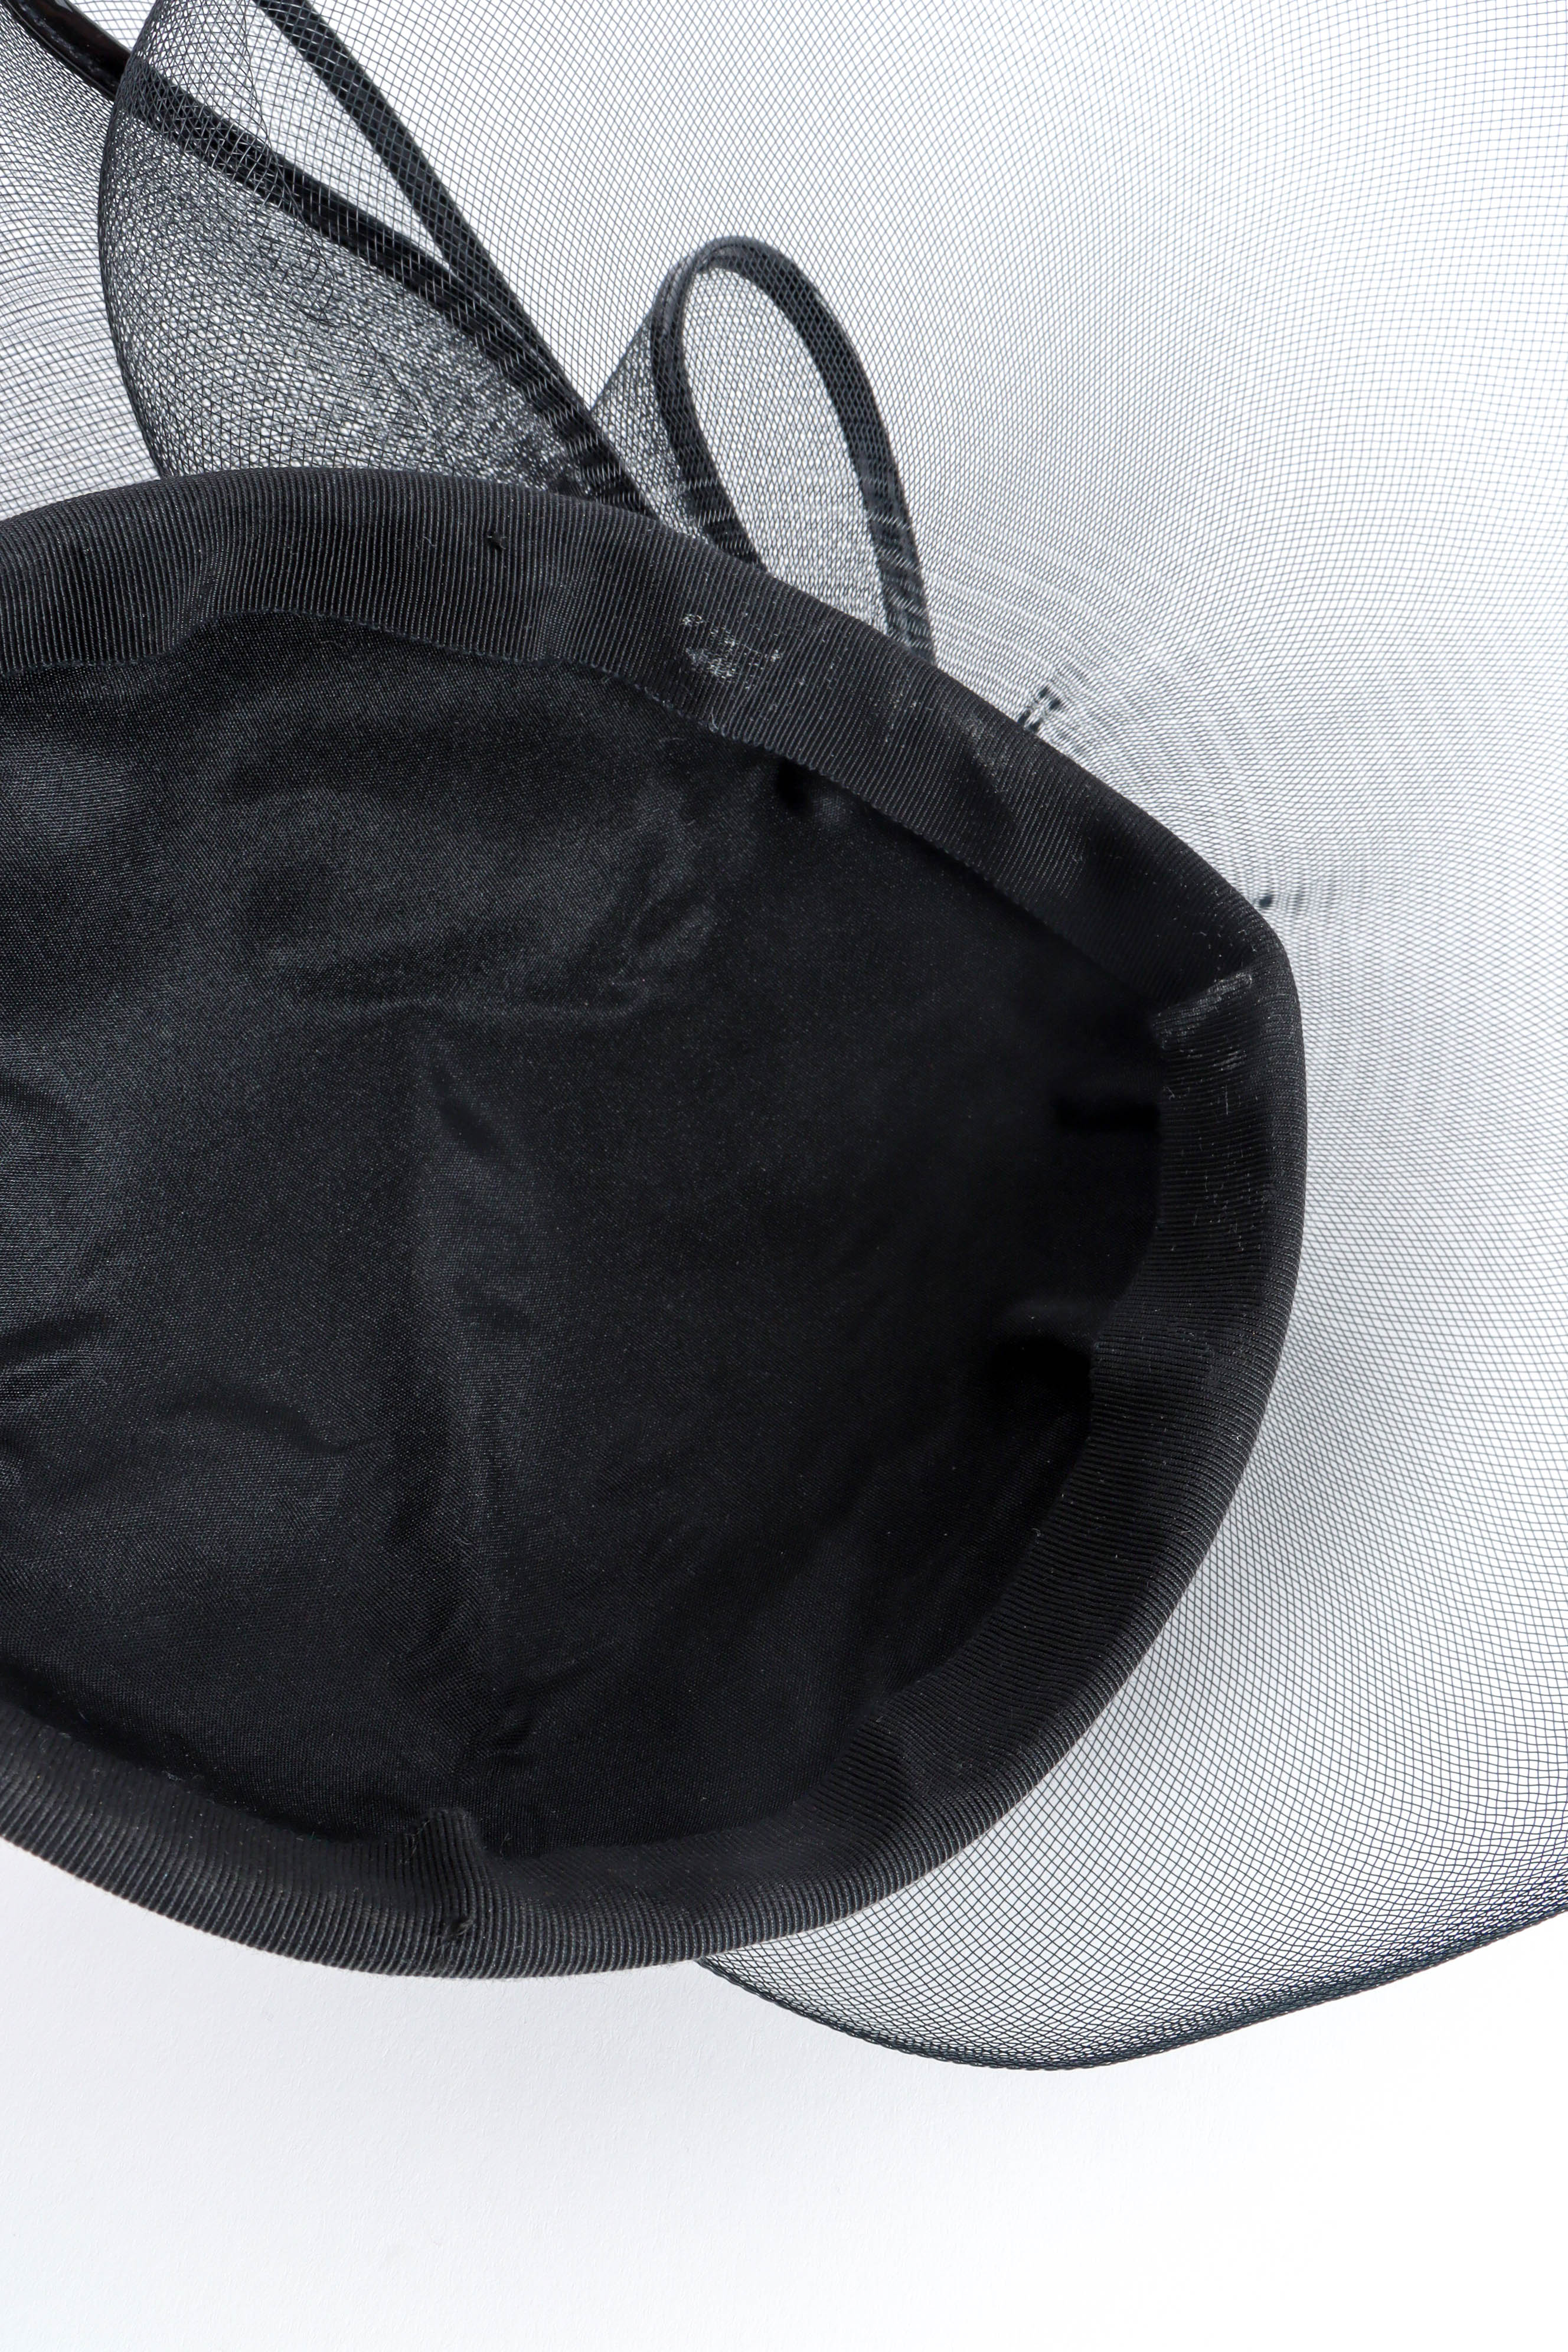 Vintage Kokin Veil Bow Fascinator Hat inverse side white markings on front inner ribbon @ Recess LA